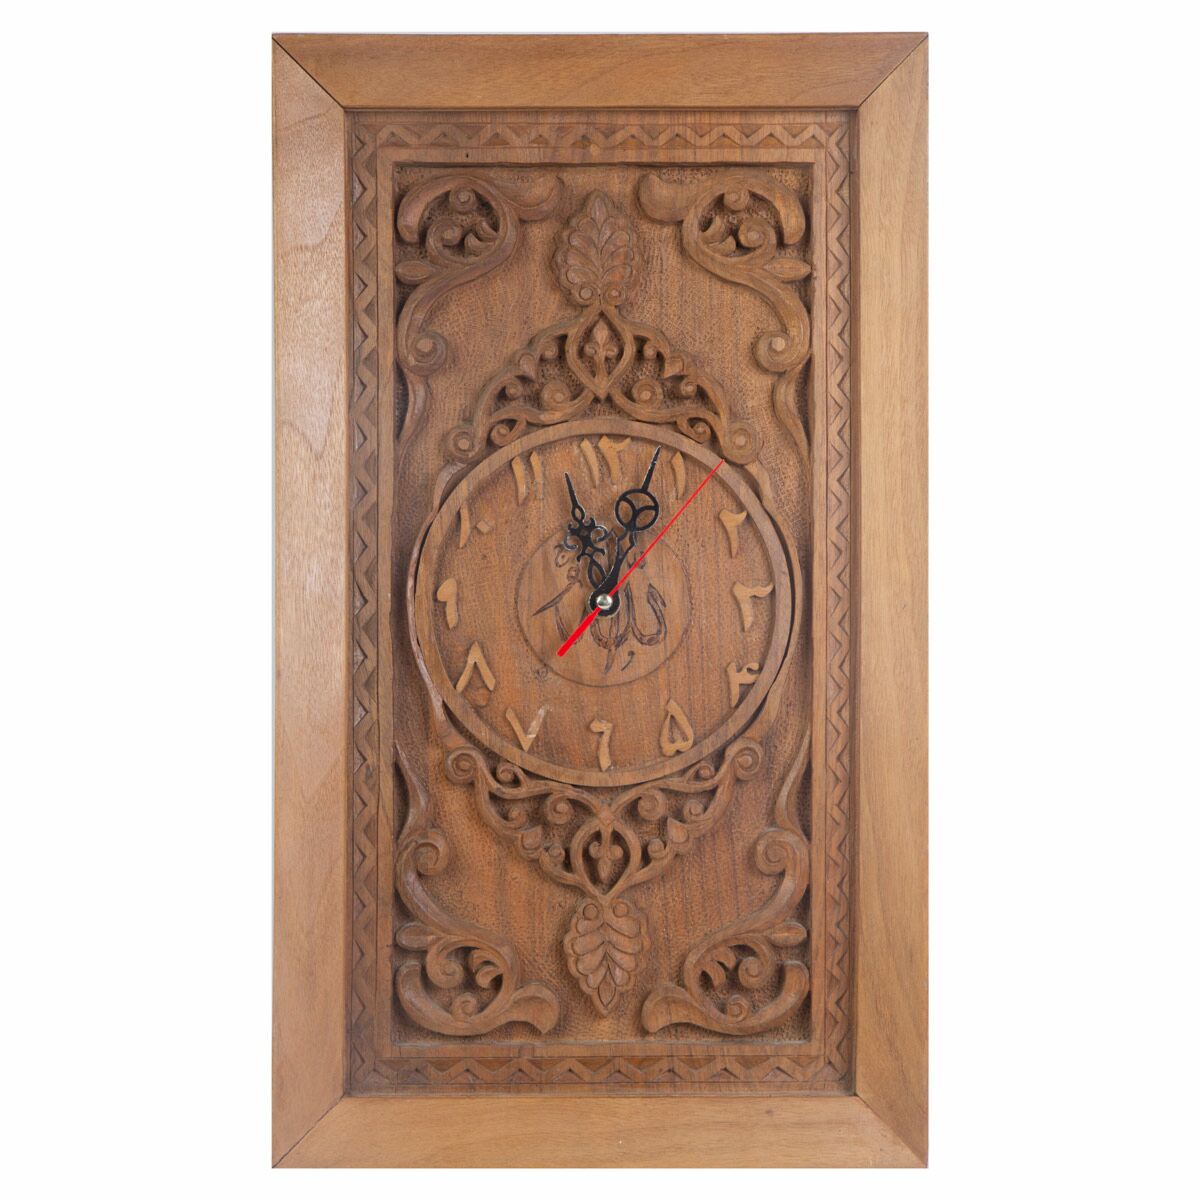 Wooden Table Clock| Classic Handmade Clock